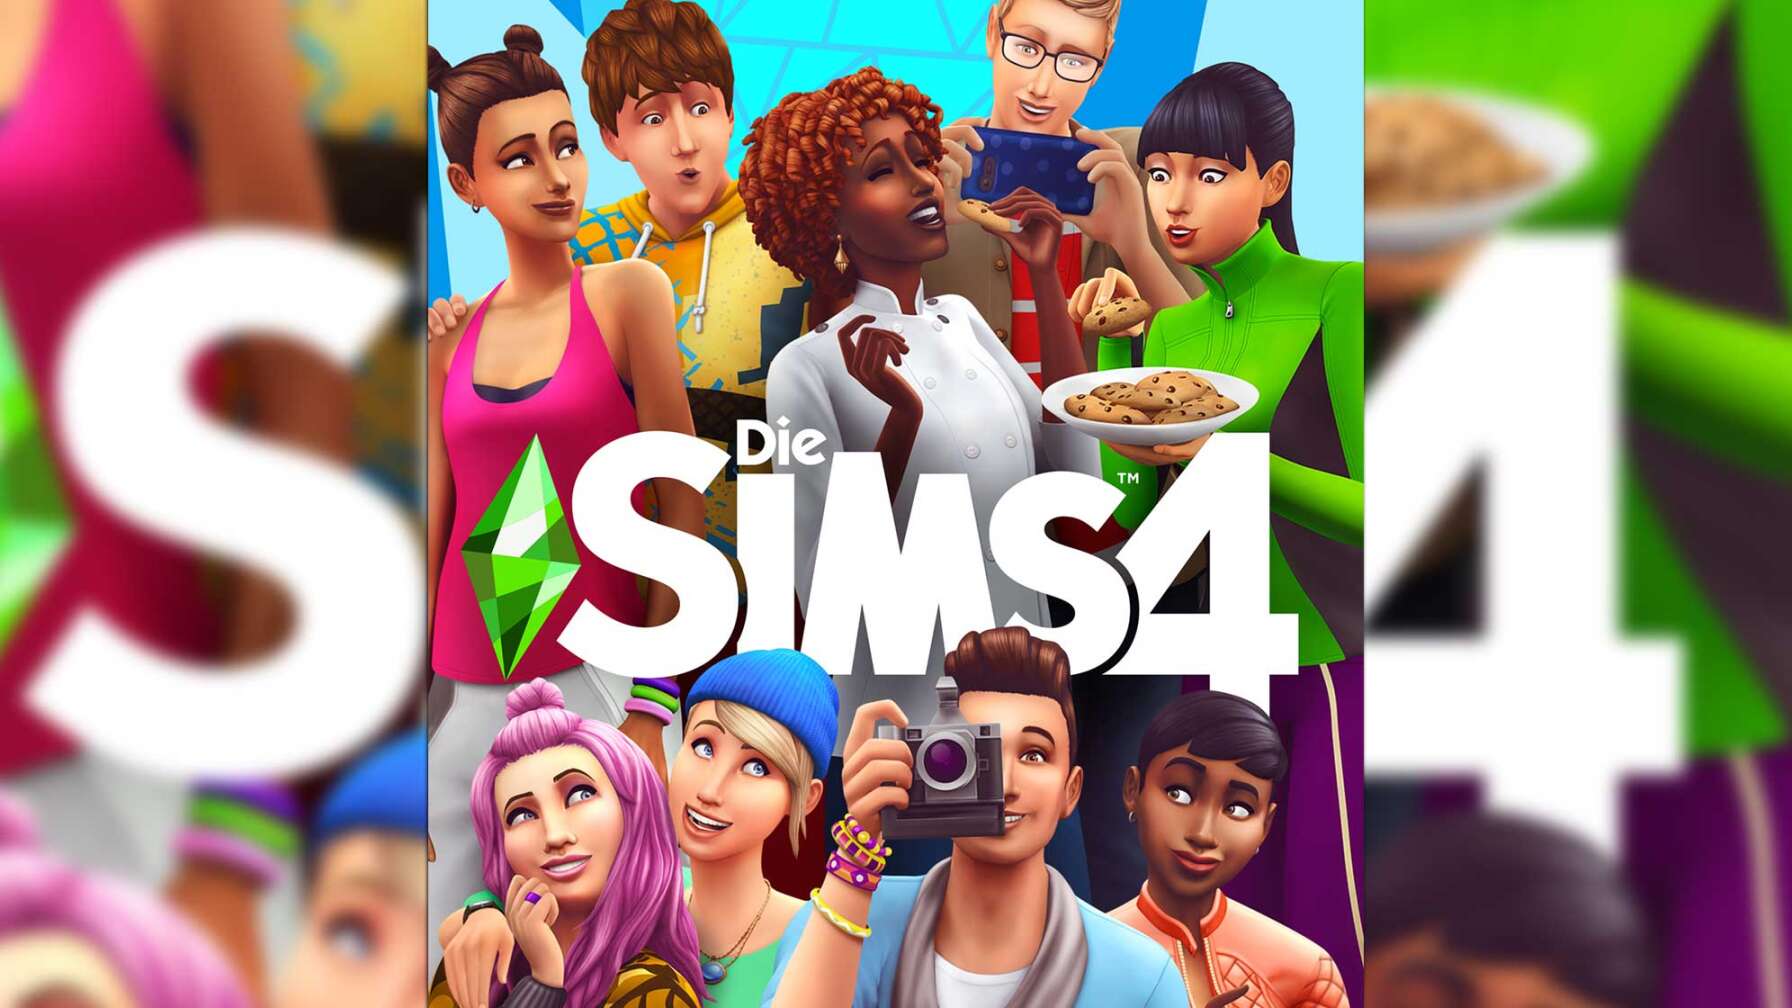 Das Cover des Computer-Spiels "Sims 4".